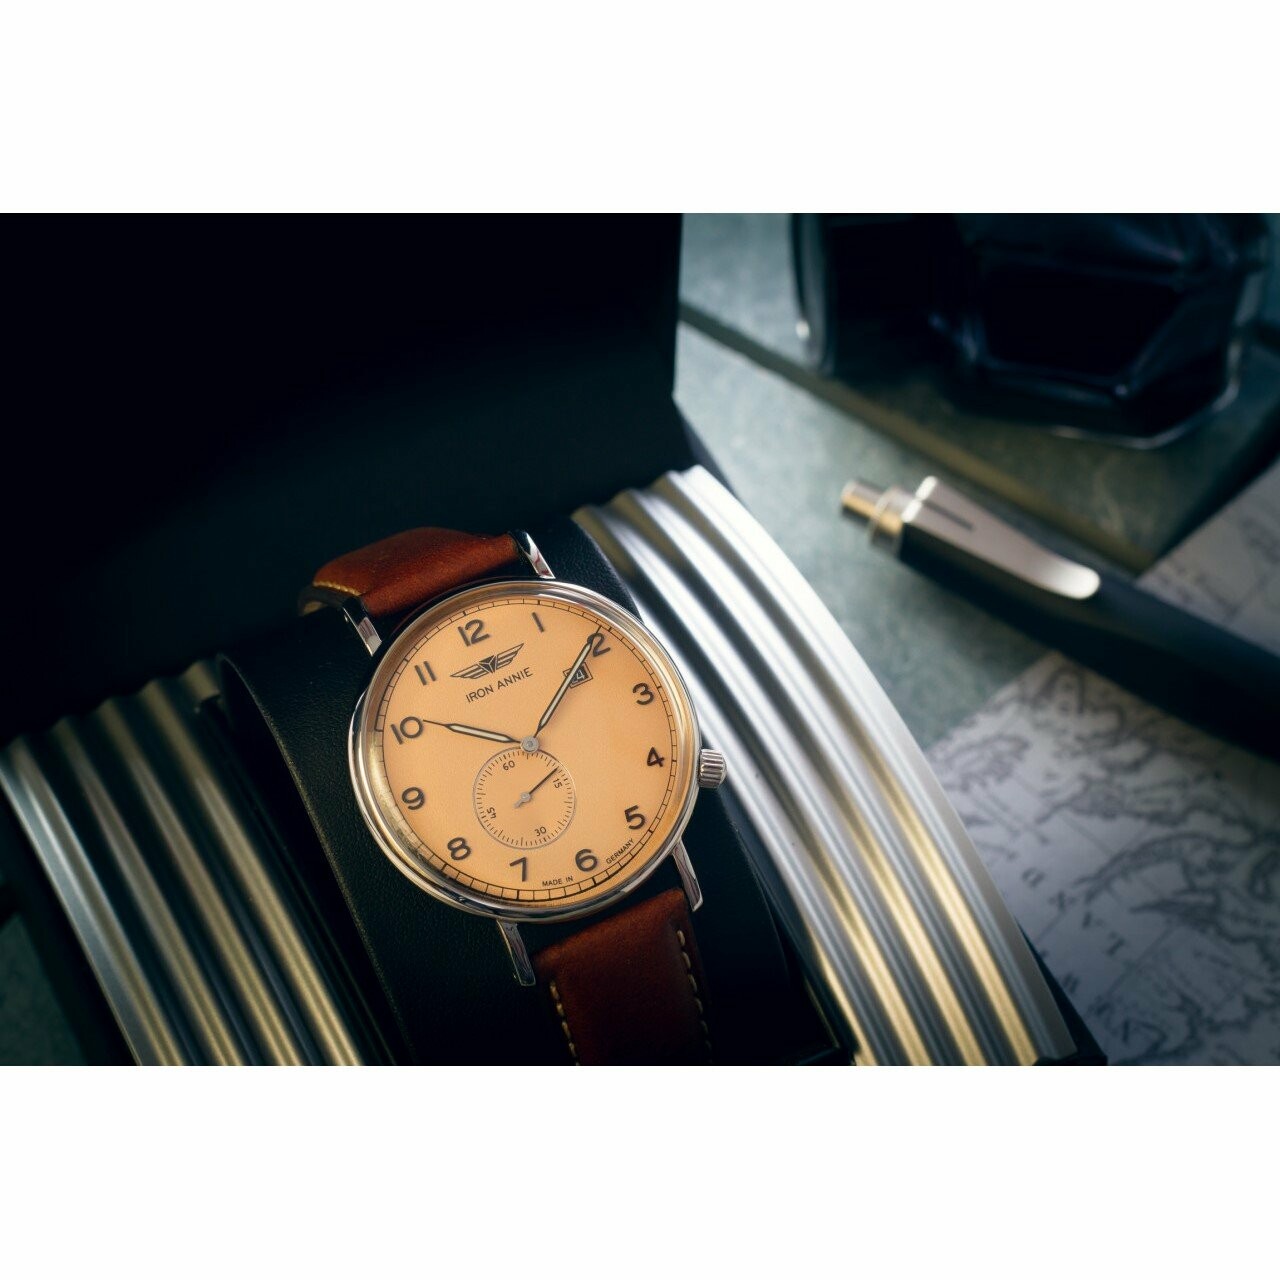 Bauhaus Watch 2037M3. Discover how the Bauhaus influenced design history